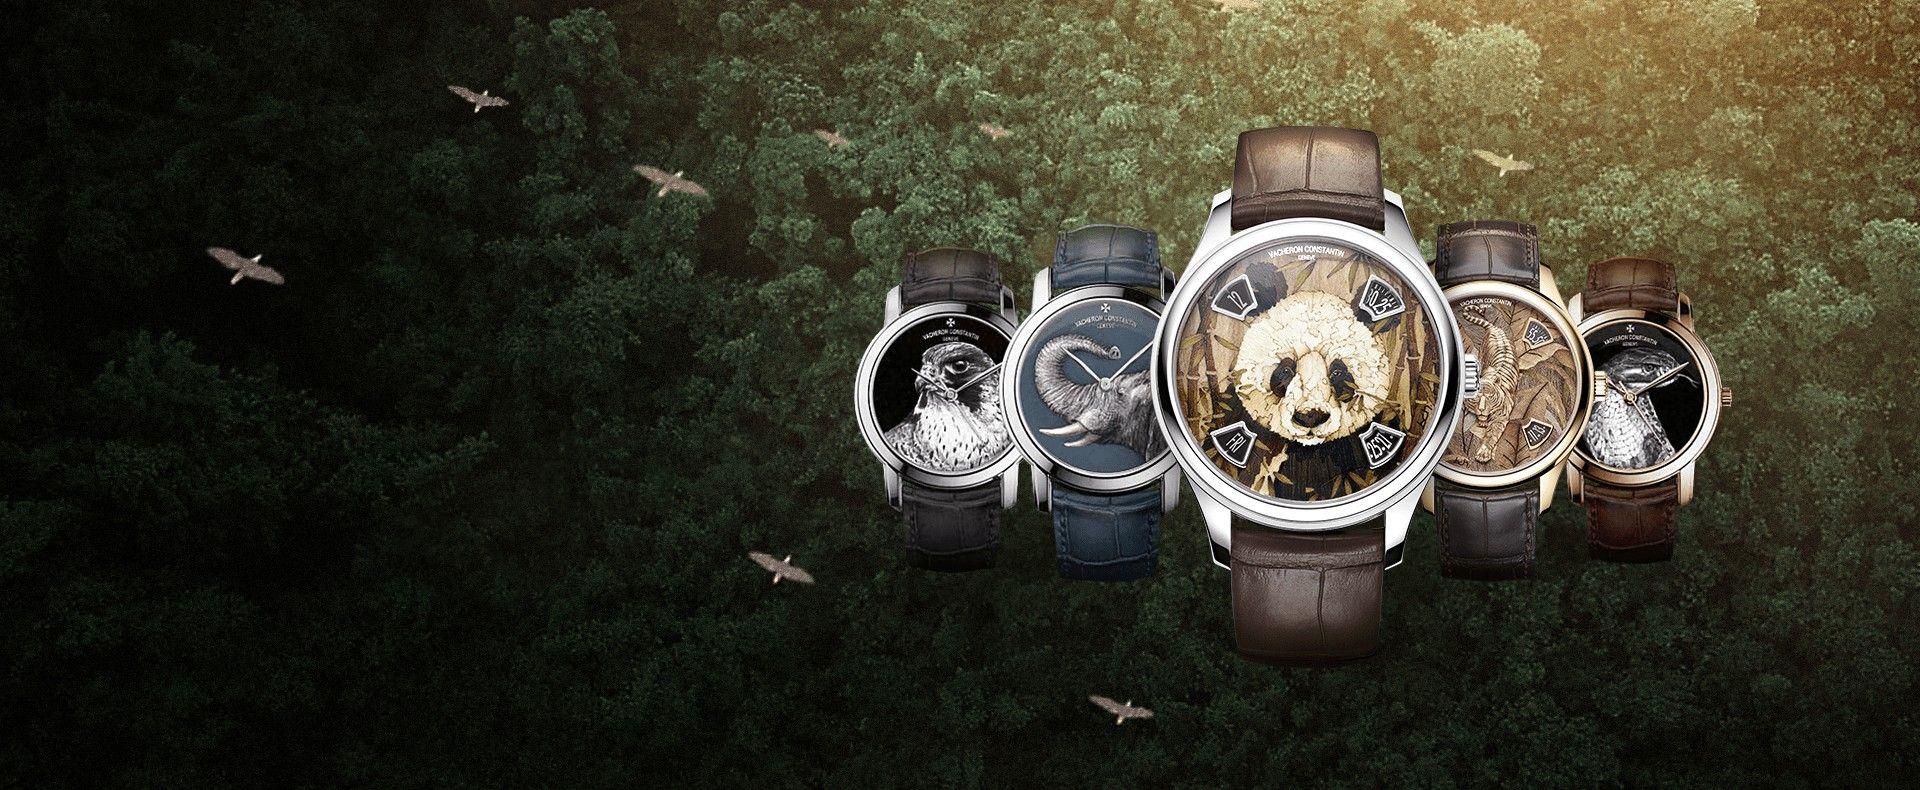 Vacheron Constantin Logo - Luxury Watches and Fine Watches